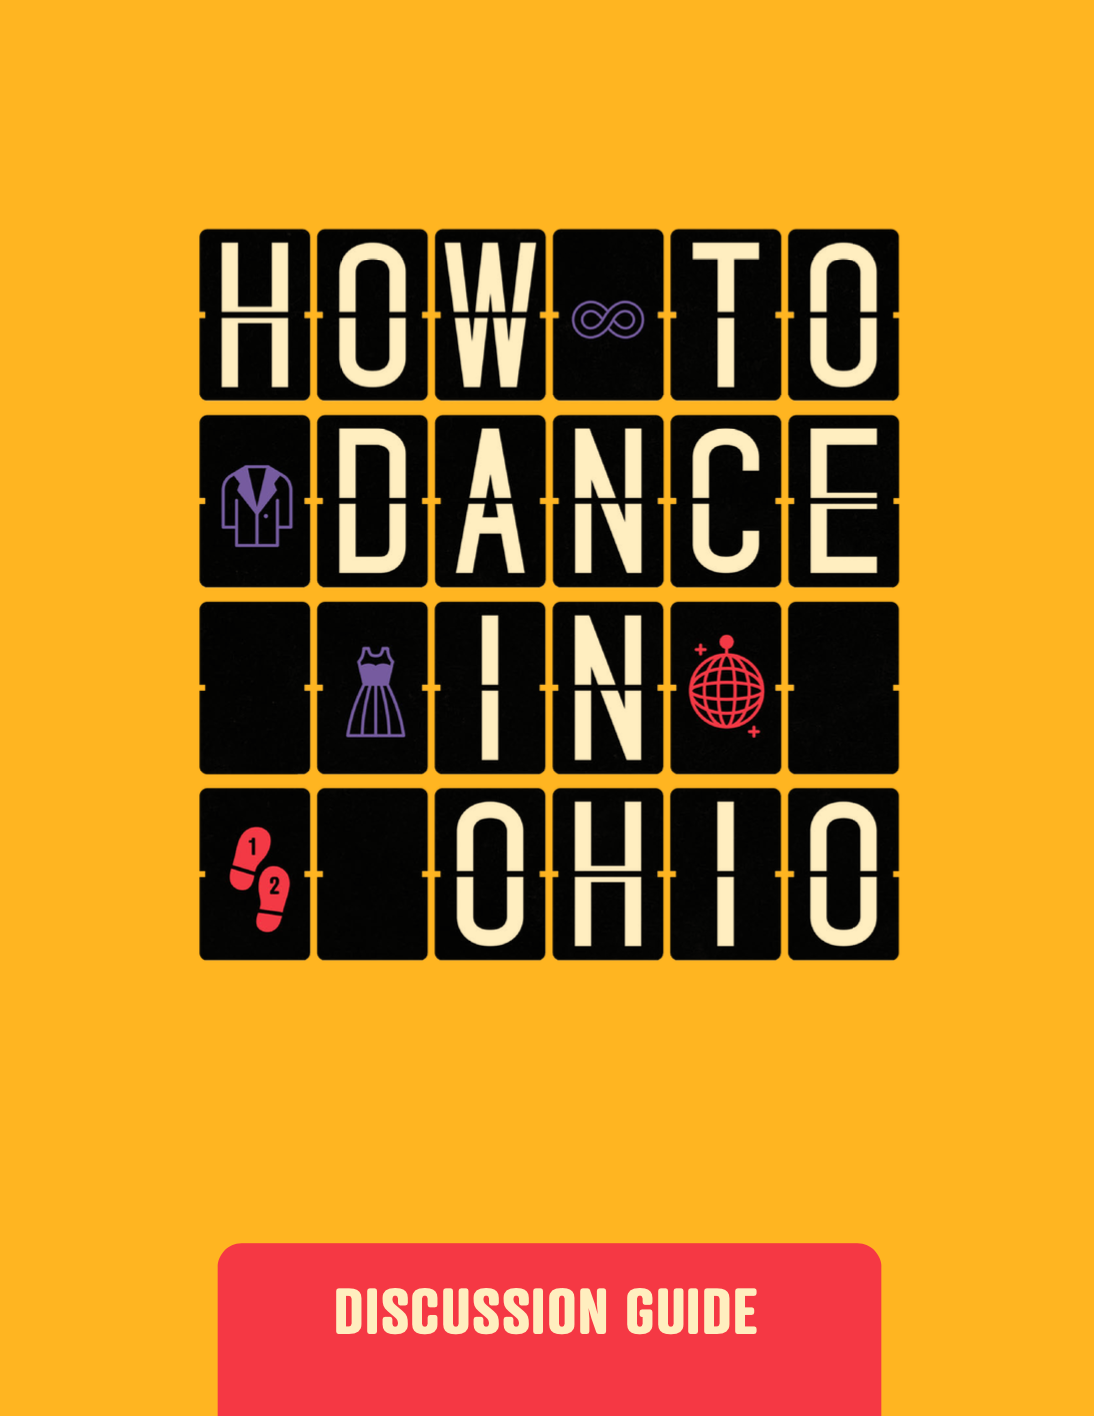 How To Dance In Ohio